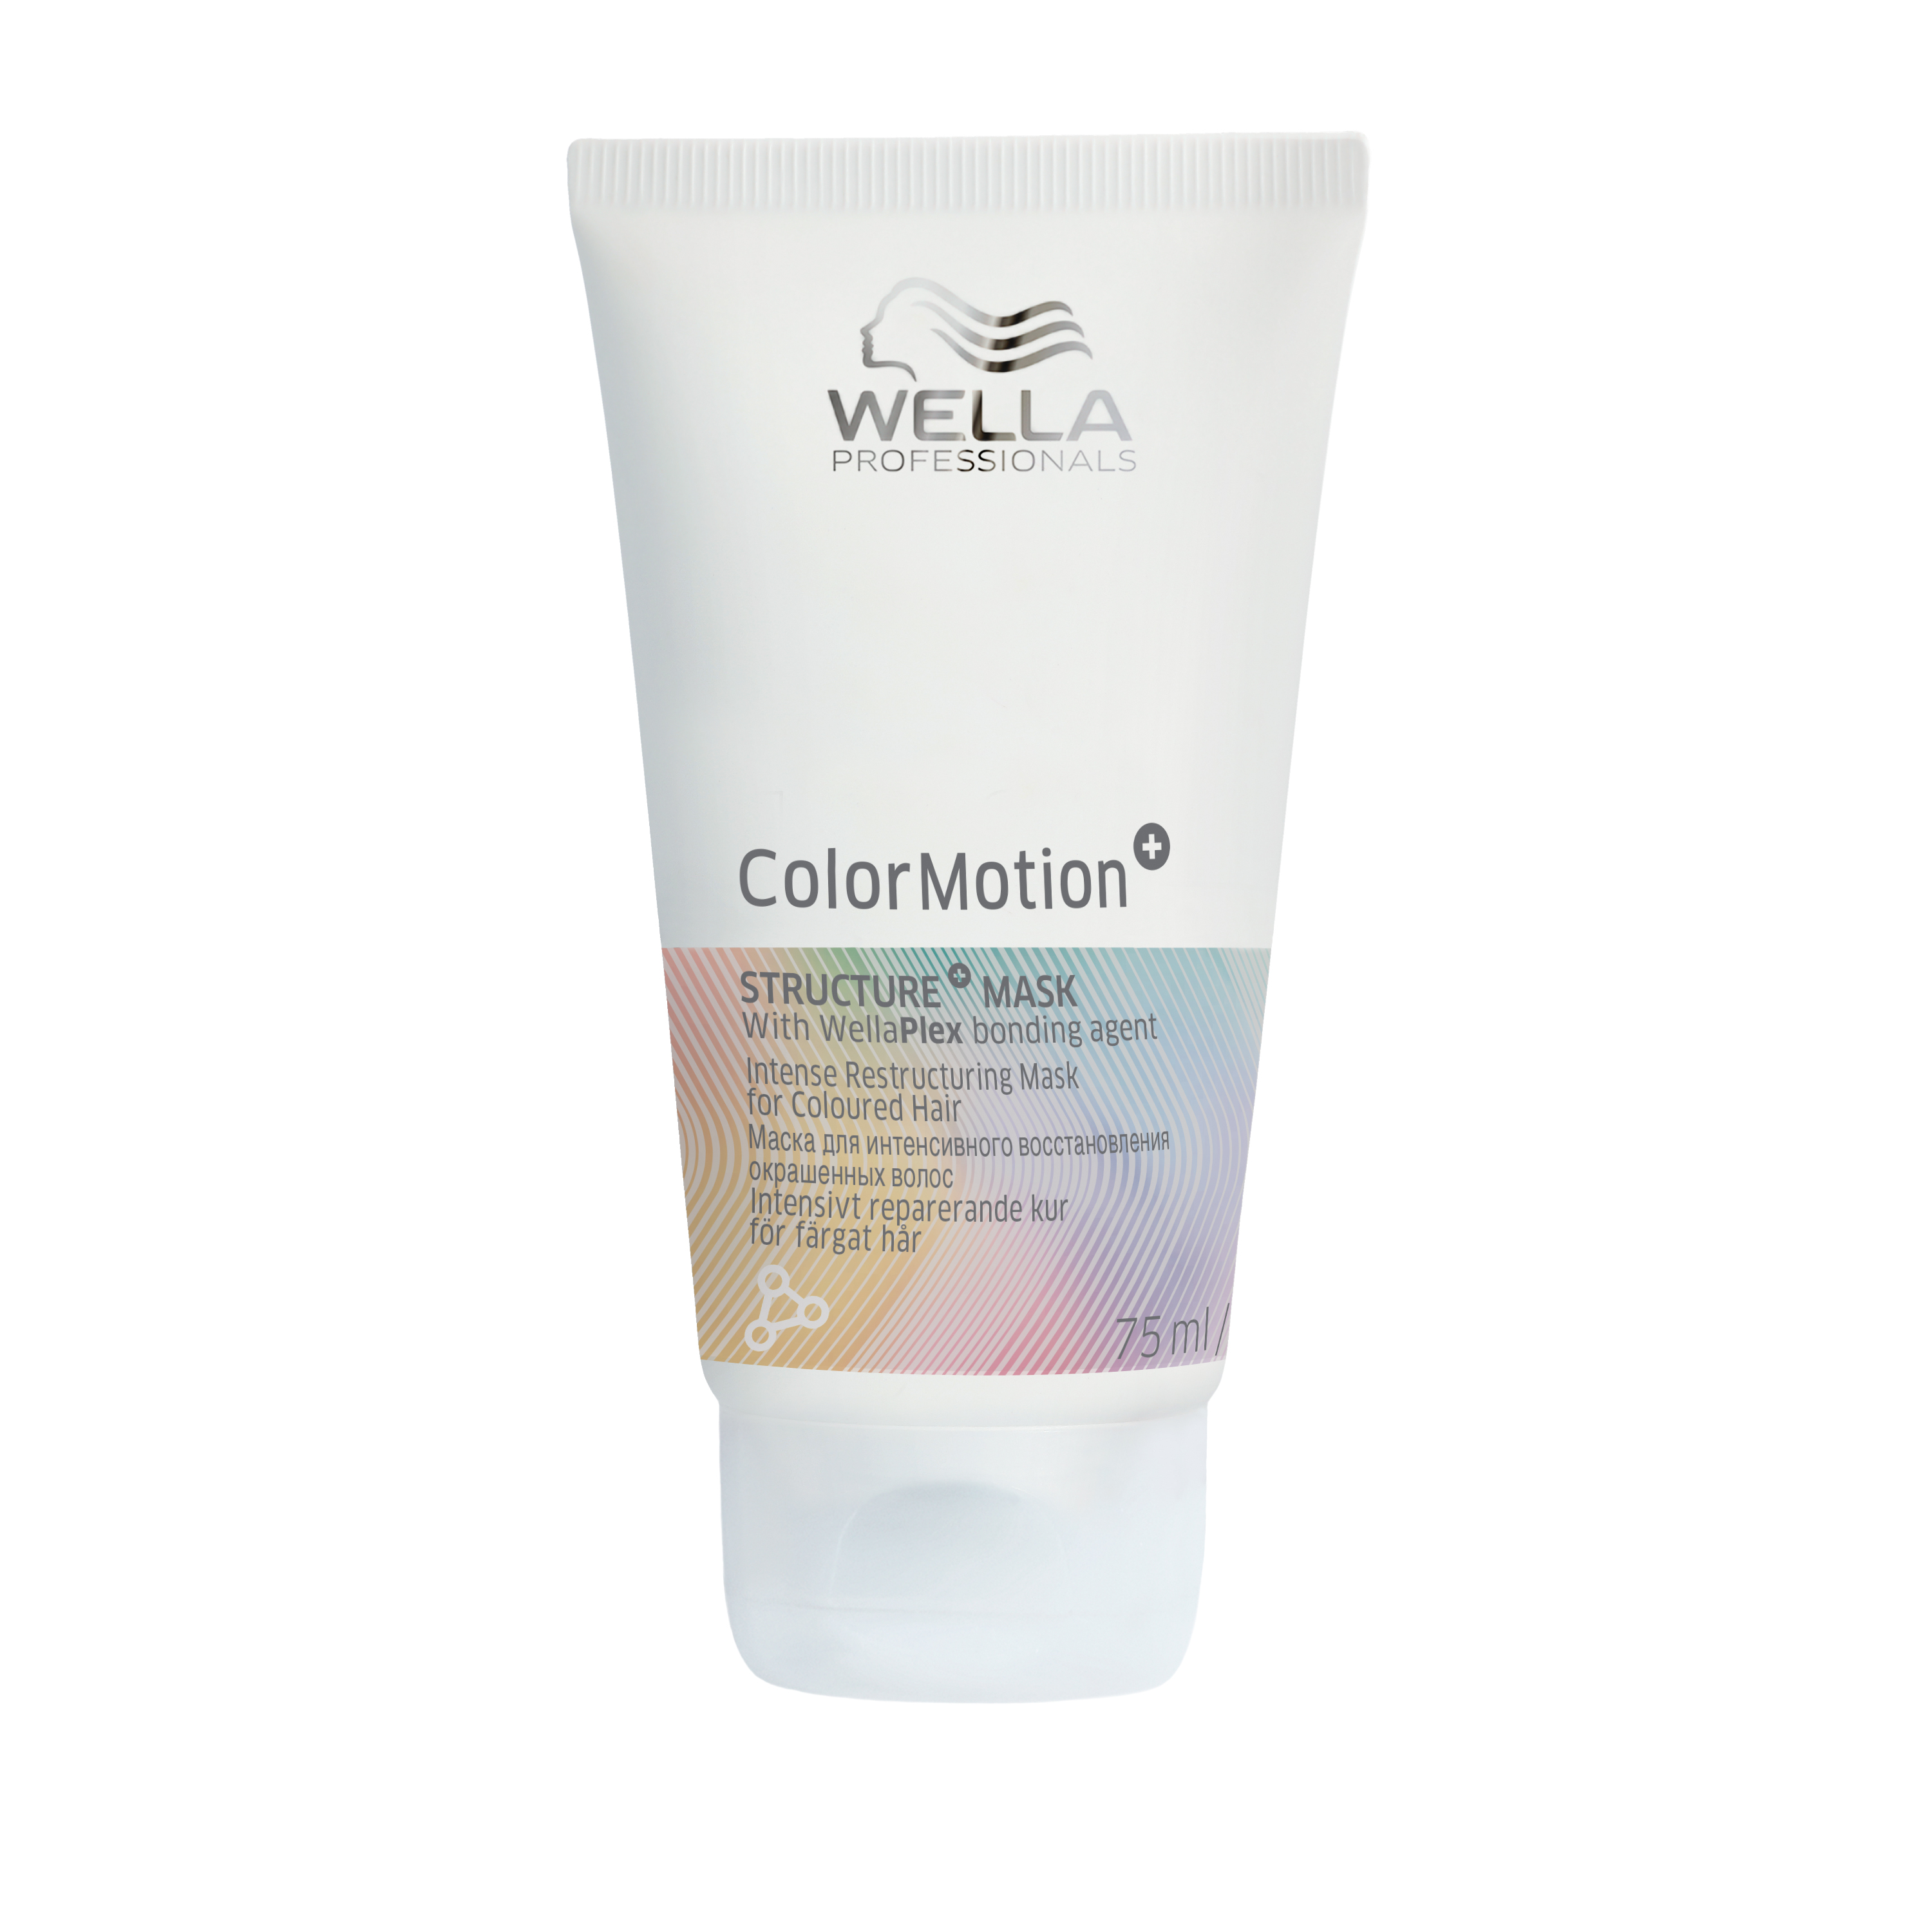 Wella ColorMotion+ Mask 75ml